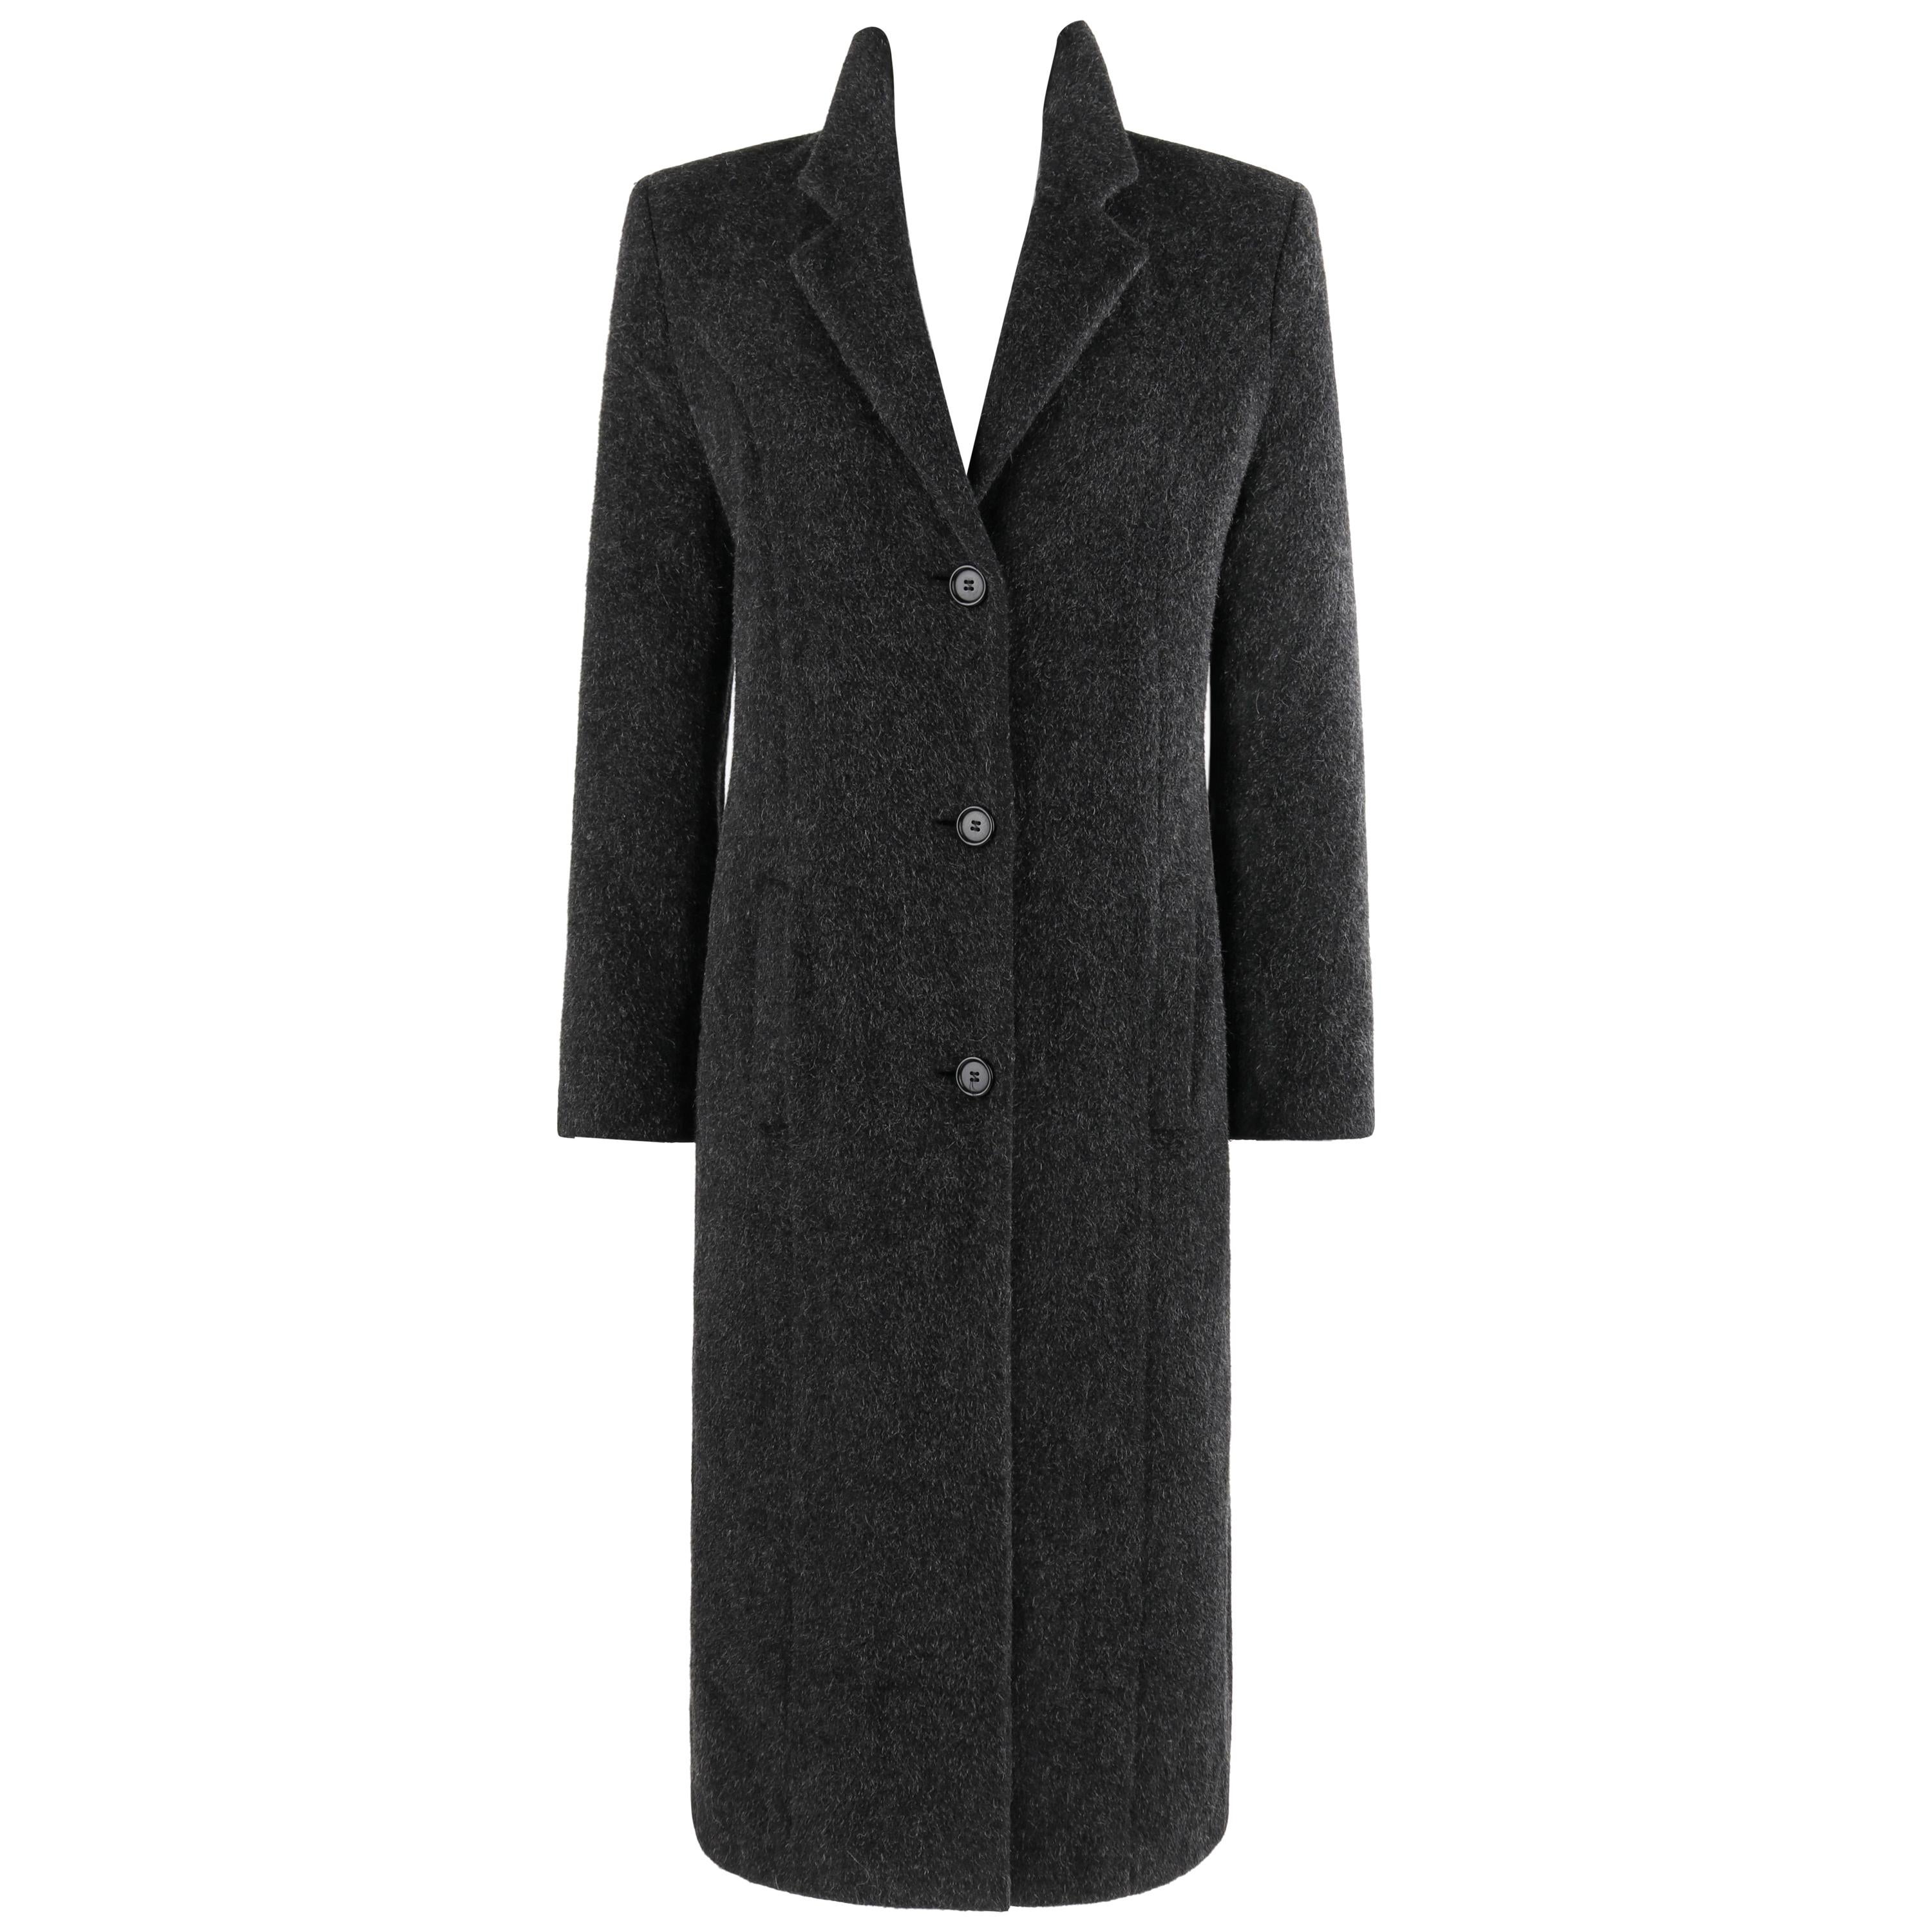 ALEXANDER McQUEEN A/W 1996 “Dante” Charcoal Gray Mohair Coat Button Up Overcoat 